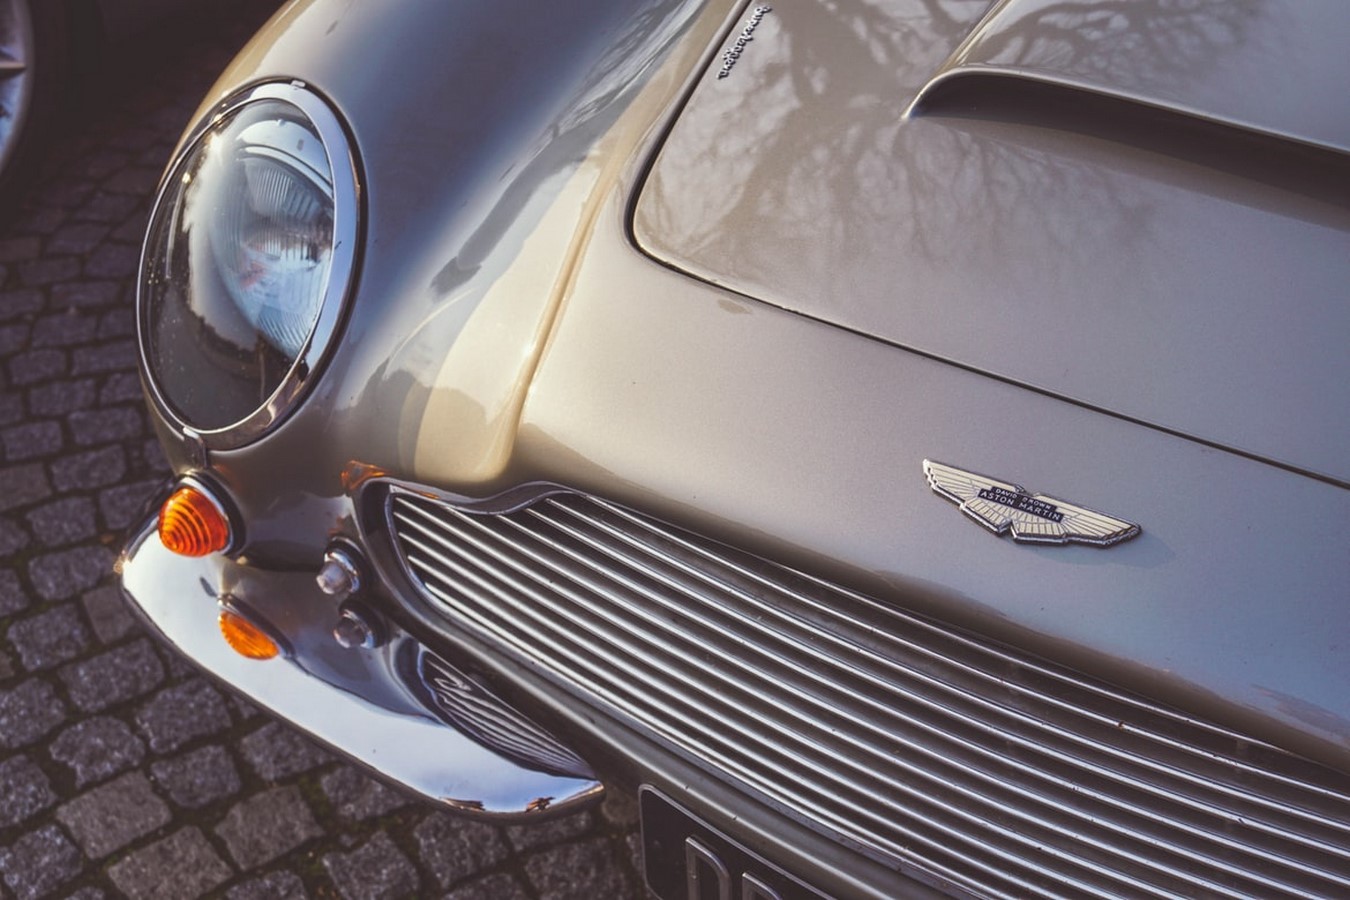 Top 10 luxury car brand designs in automotive industry - Sheet1